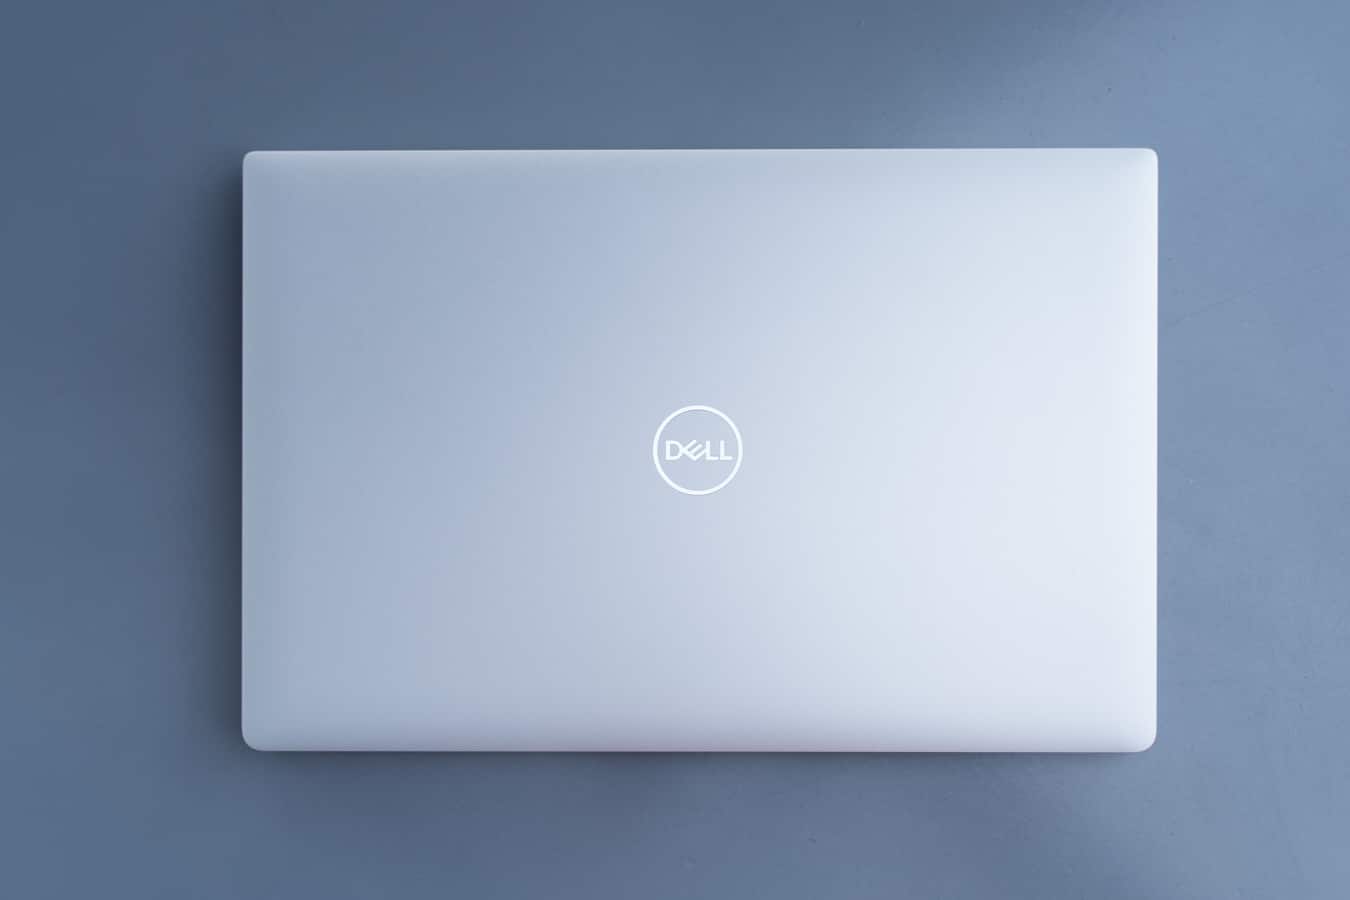 Dell XPS 15 laptop silver exterior